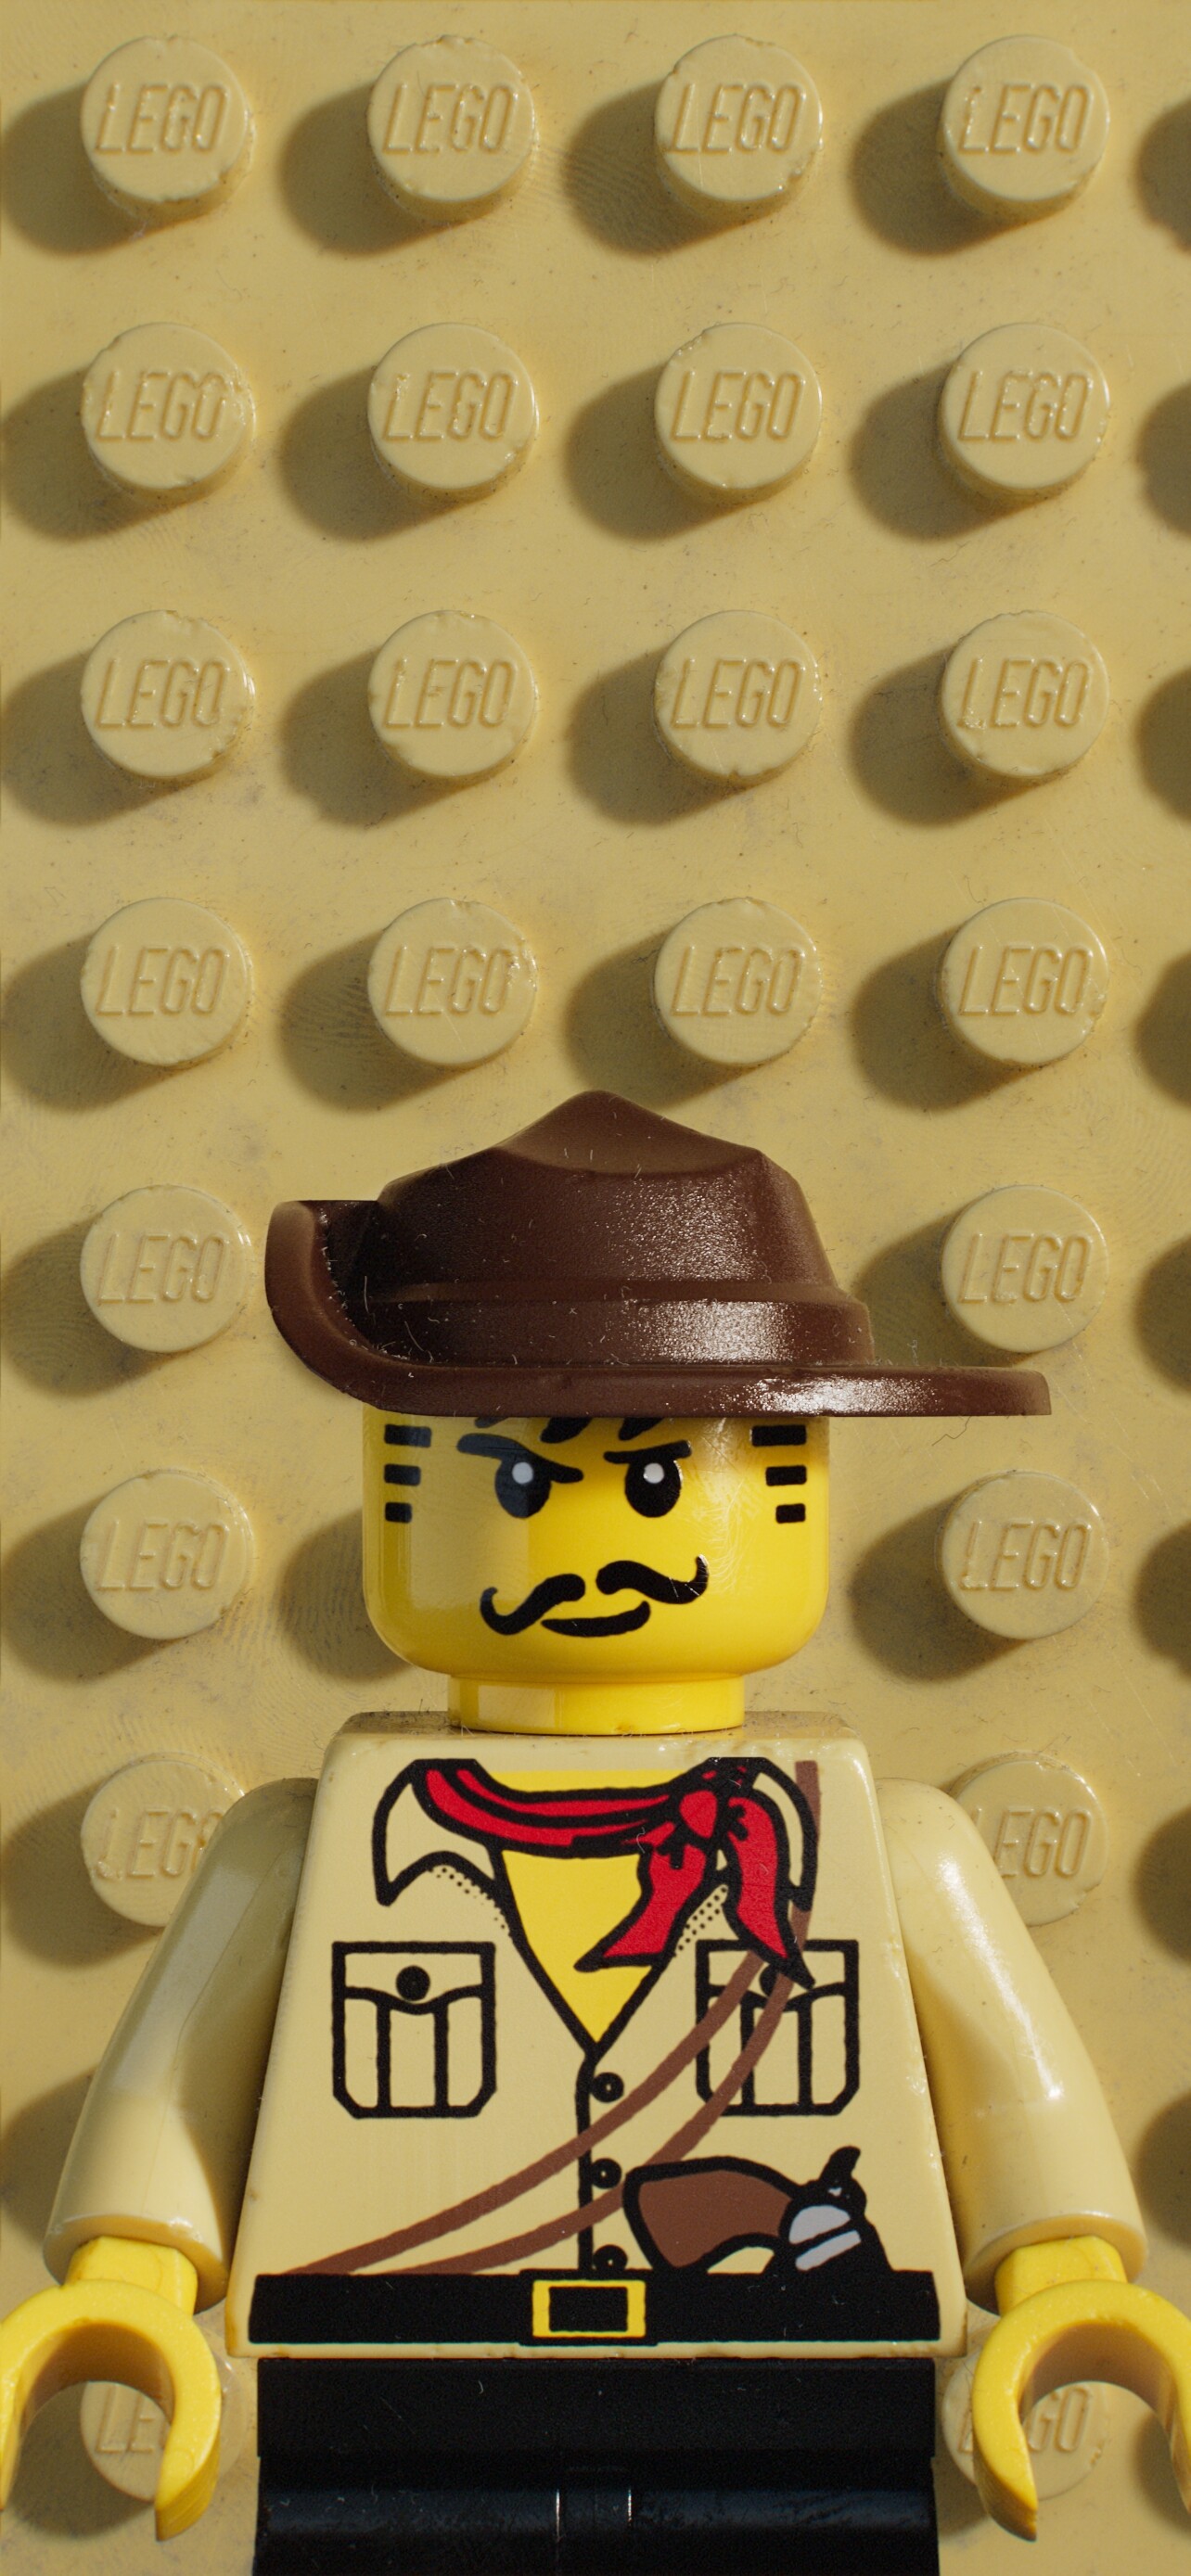 Lego 2K Drive Wallpapers - Top 10 Best Lego 2K Drive Wallpapers Download